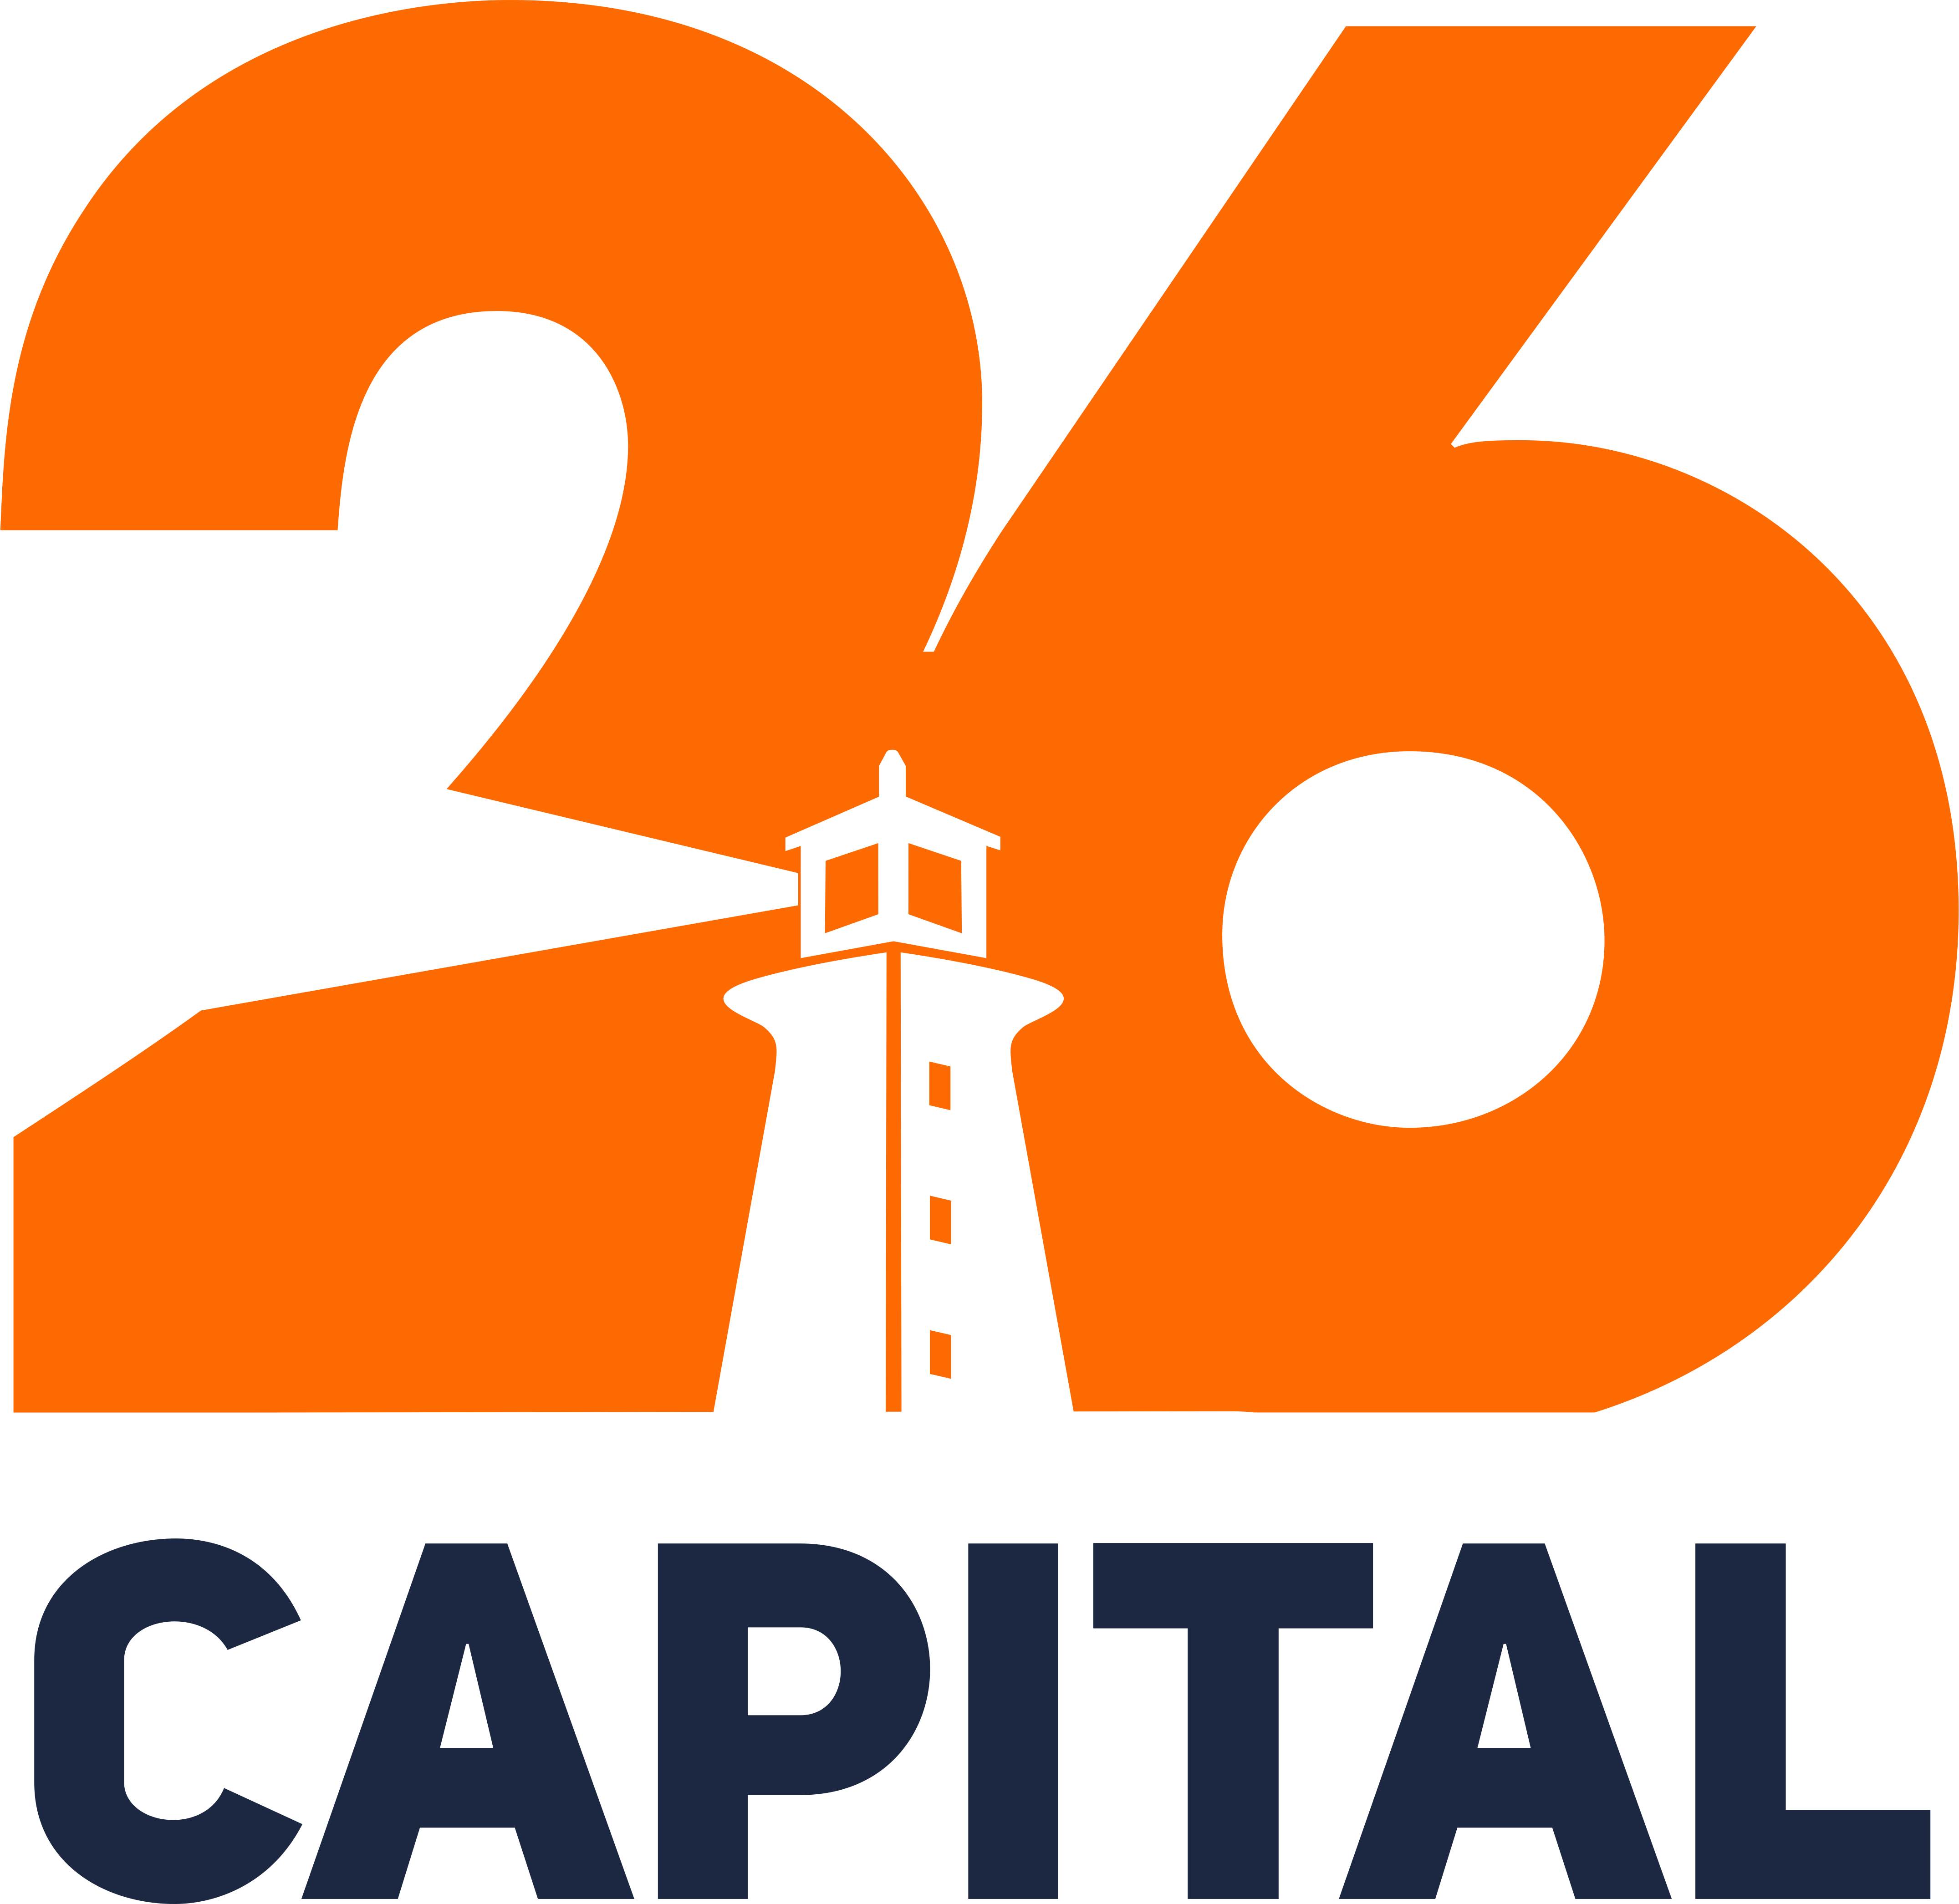 26 capital